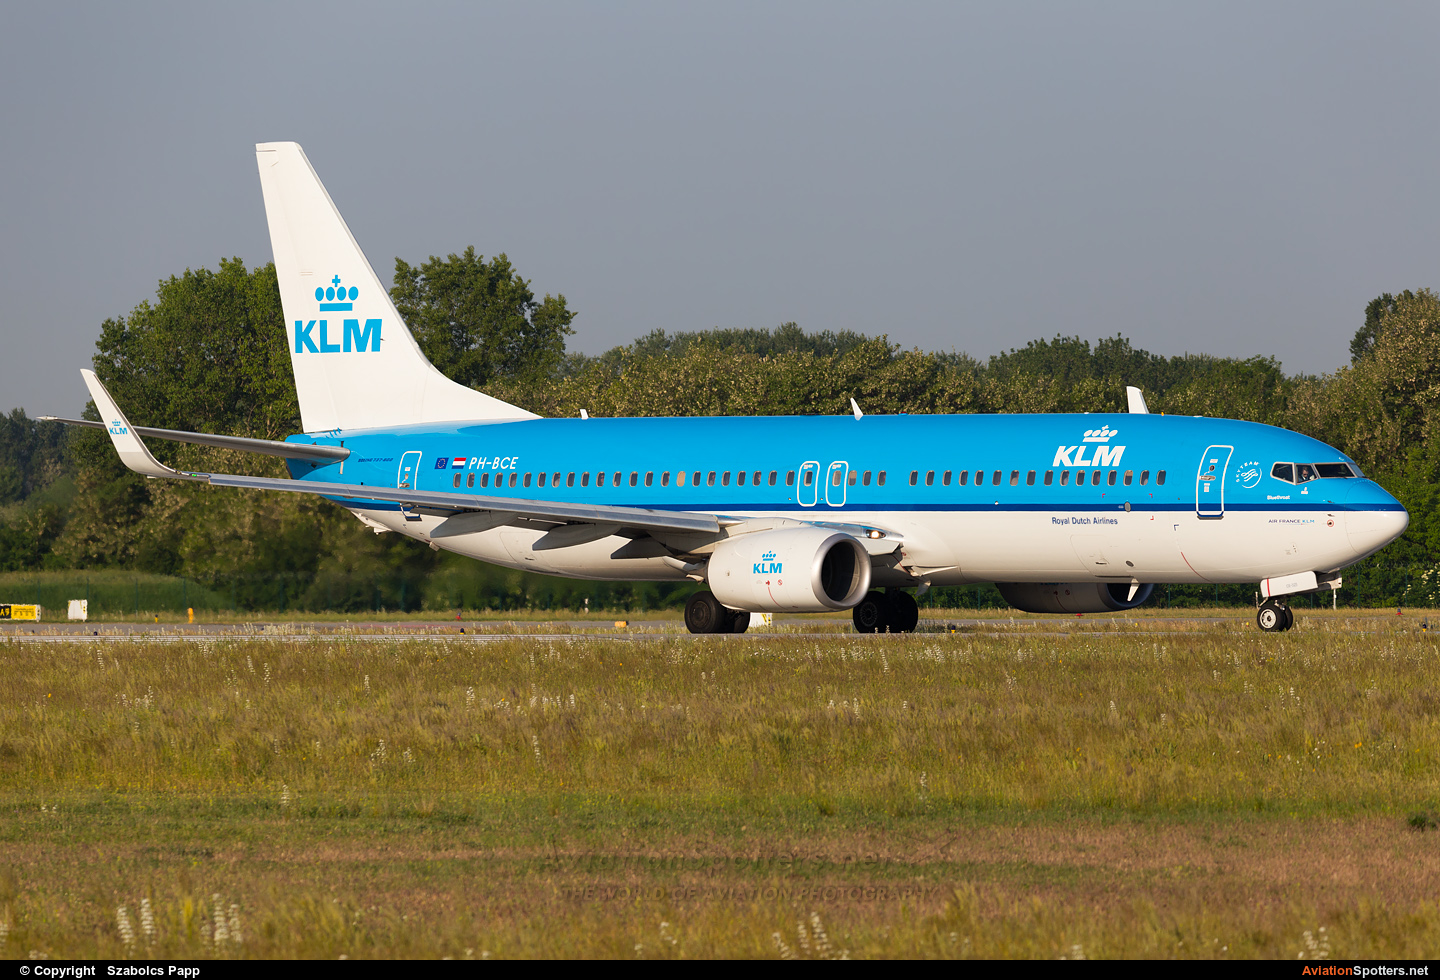 KLM  -  737-800  (PH-BCE) By Szabolcs Papp (mr.szabi)